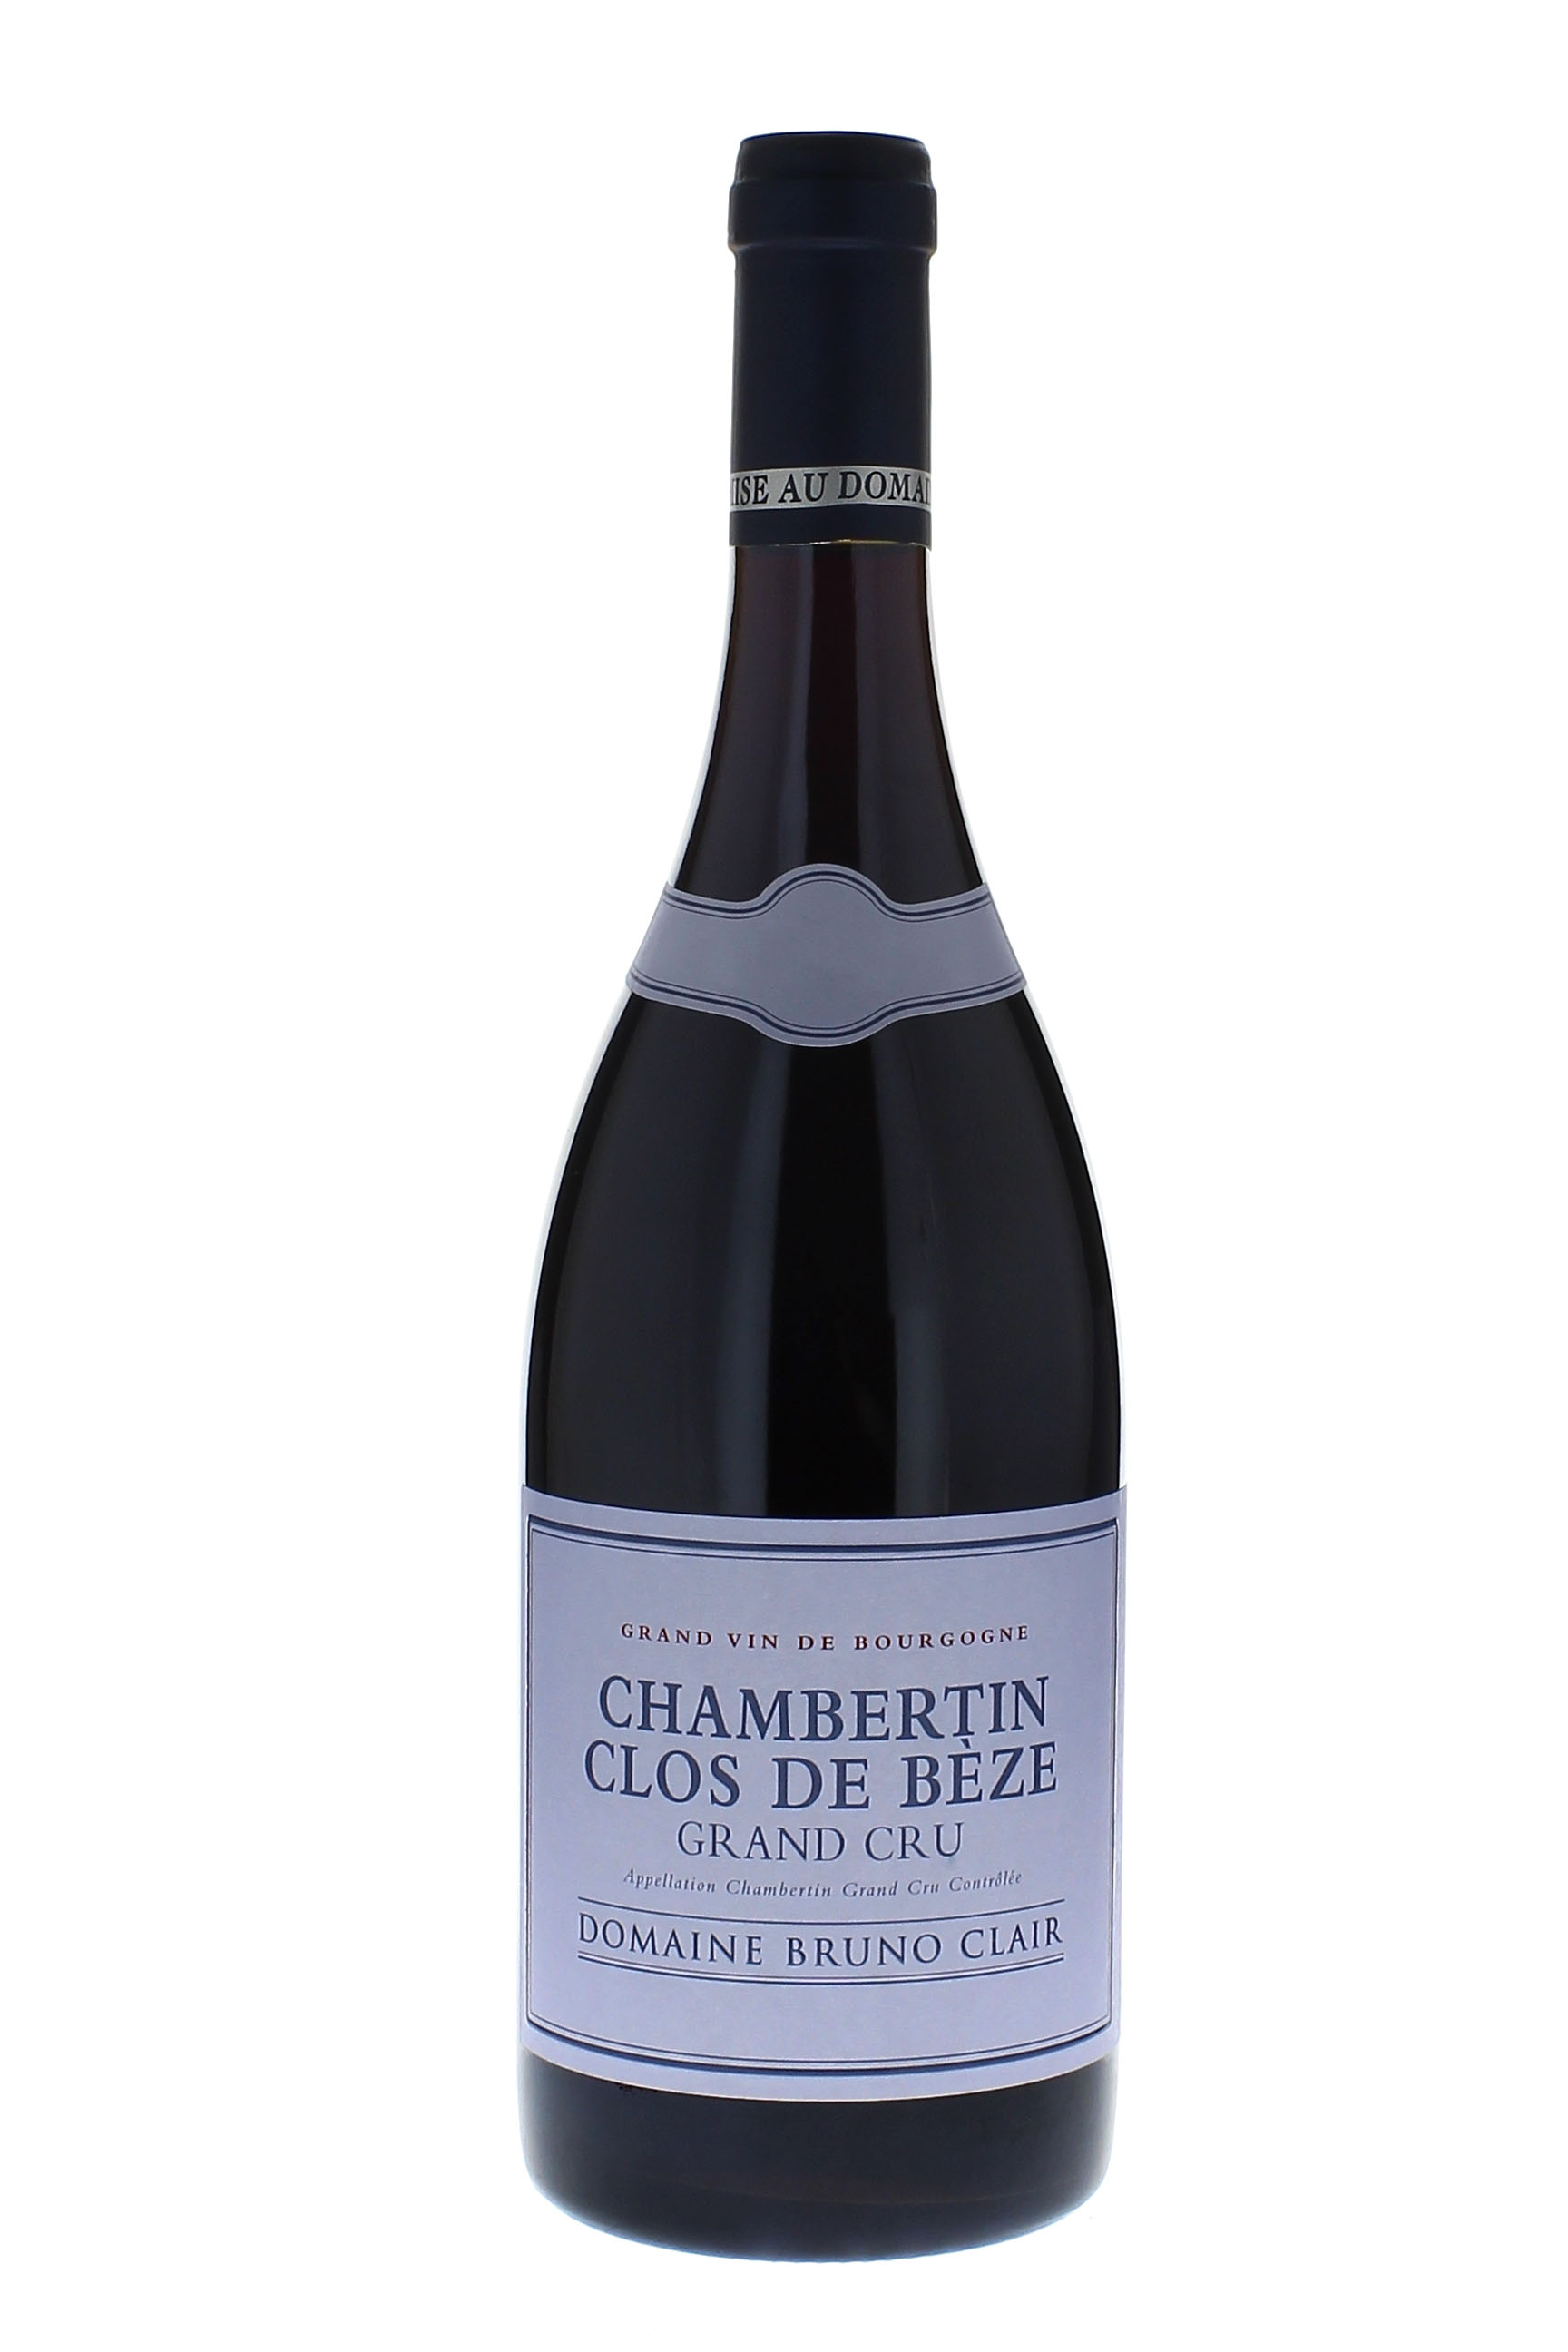 Chambertin grand cru clos de beze 2011 Domaine CLAIR BRUNO, Bourgogne rouge